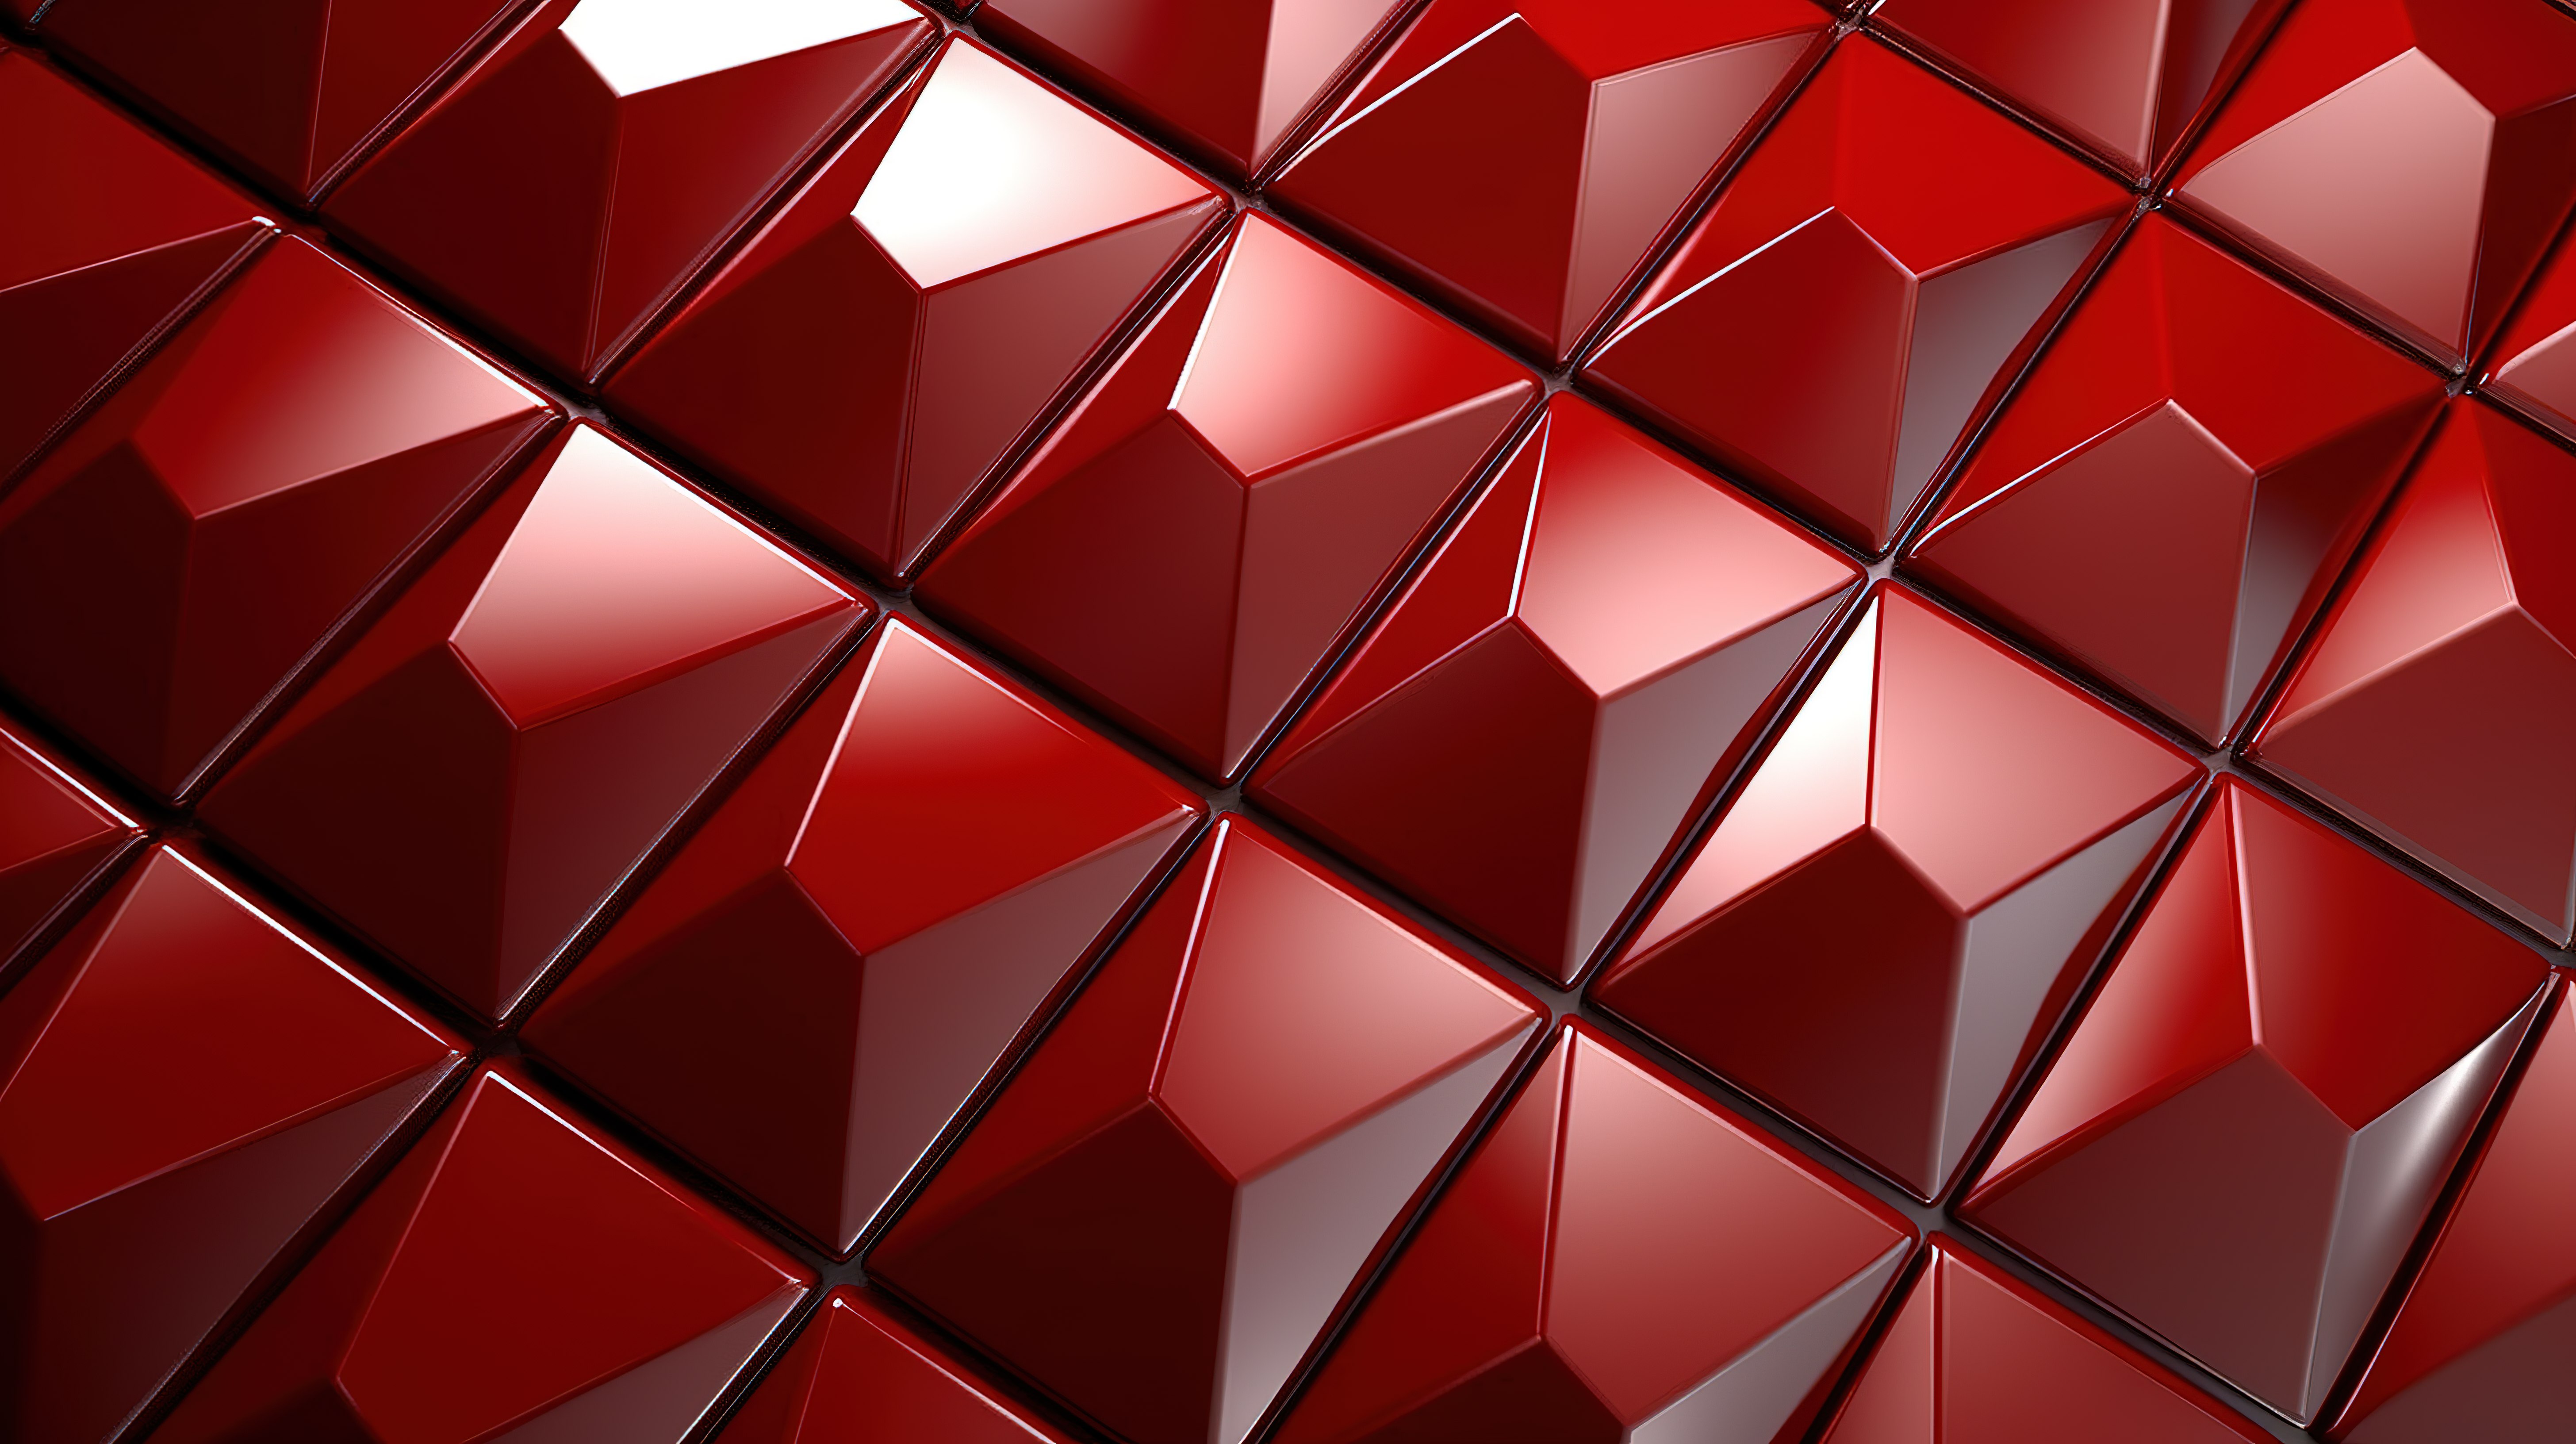 3D 红色菱形墙非常适合背景或壁纸图片